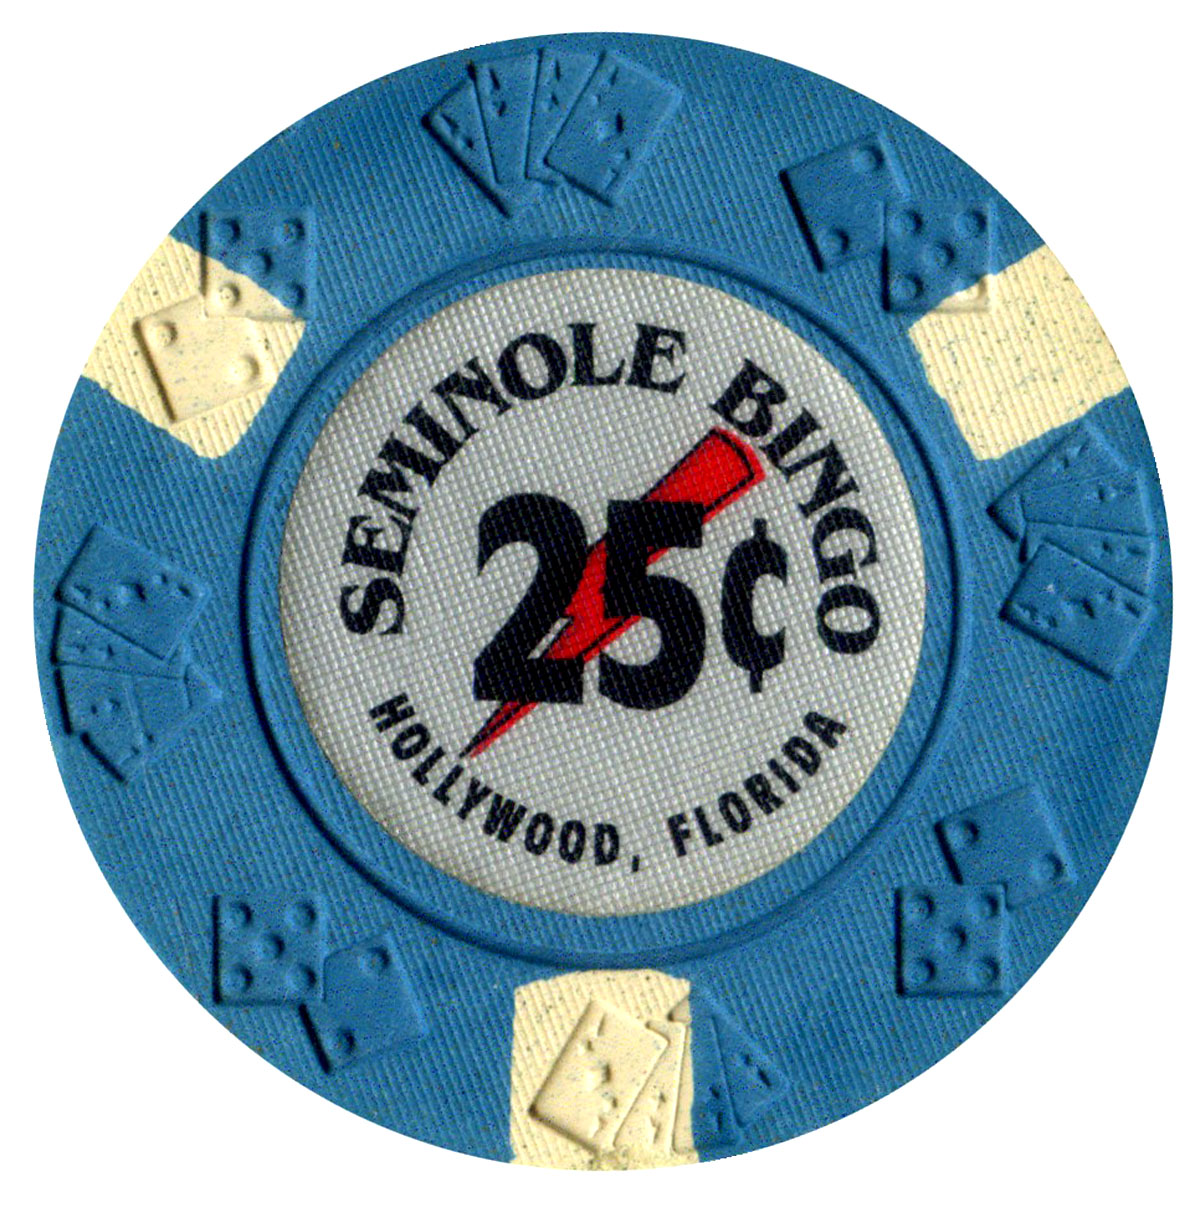 Bingo Seminole Casino Hollywood